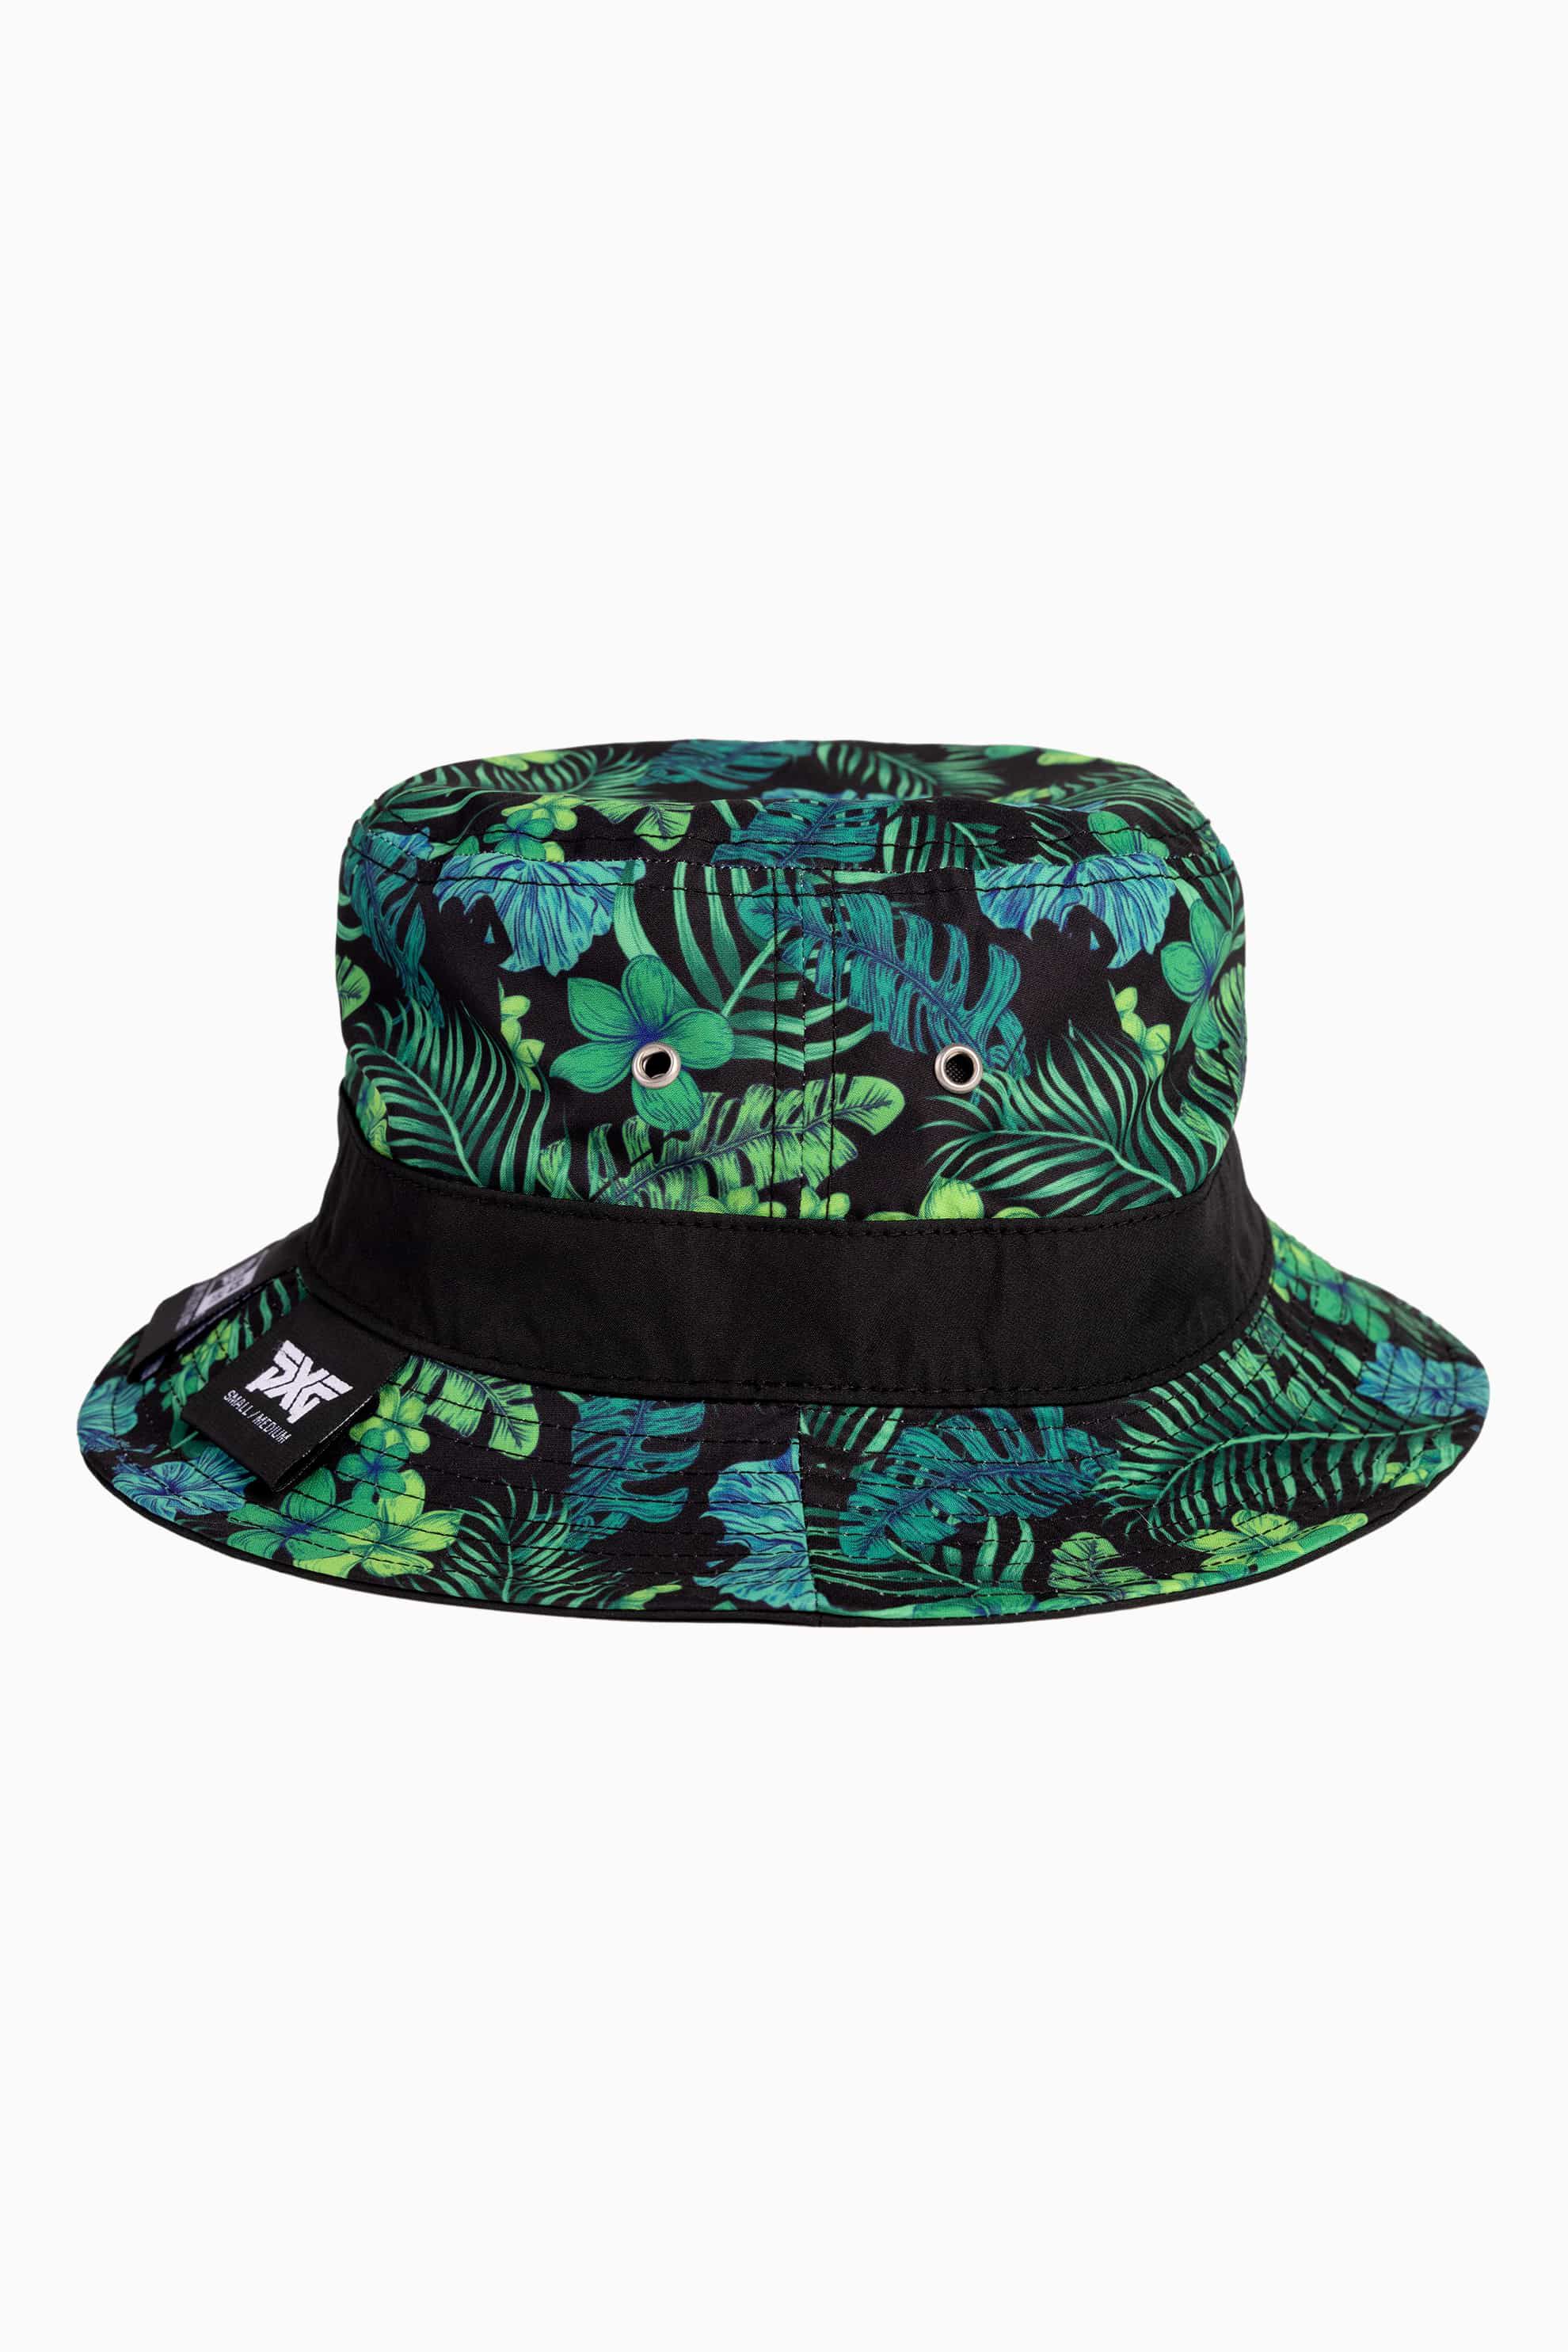 Aloha 23 Bucket Hat | Shop the Highest Quality Golf Apparel, Gear